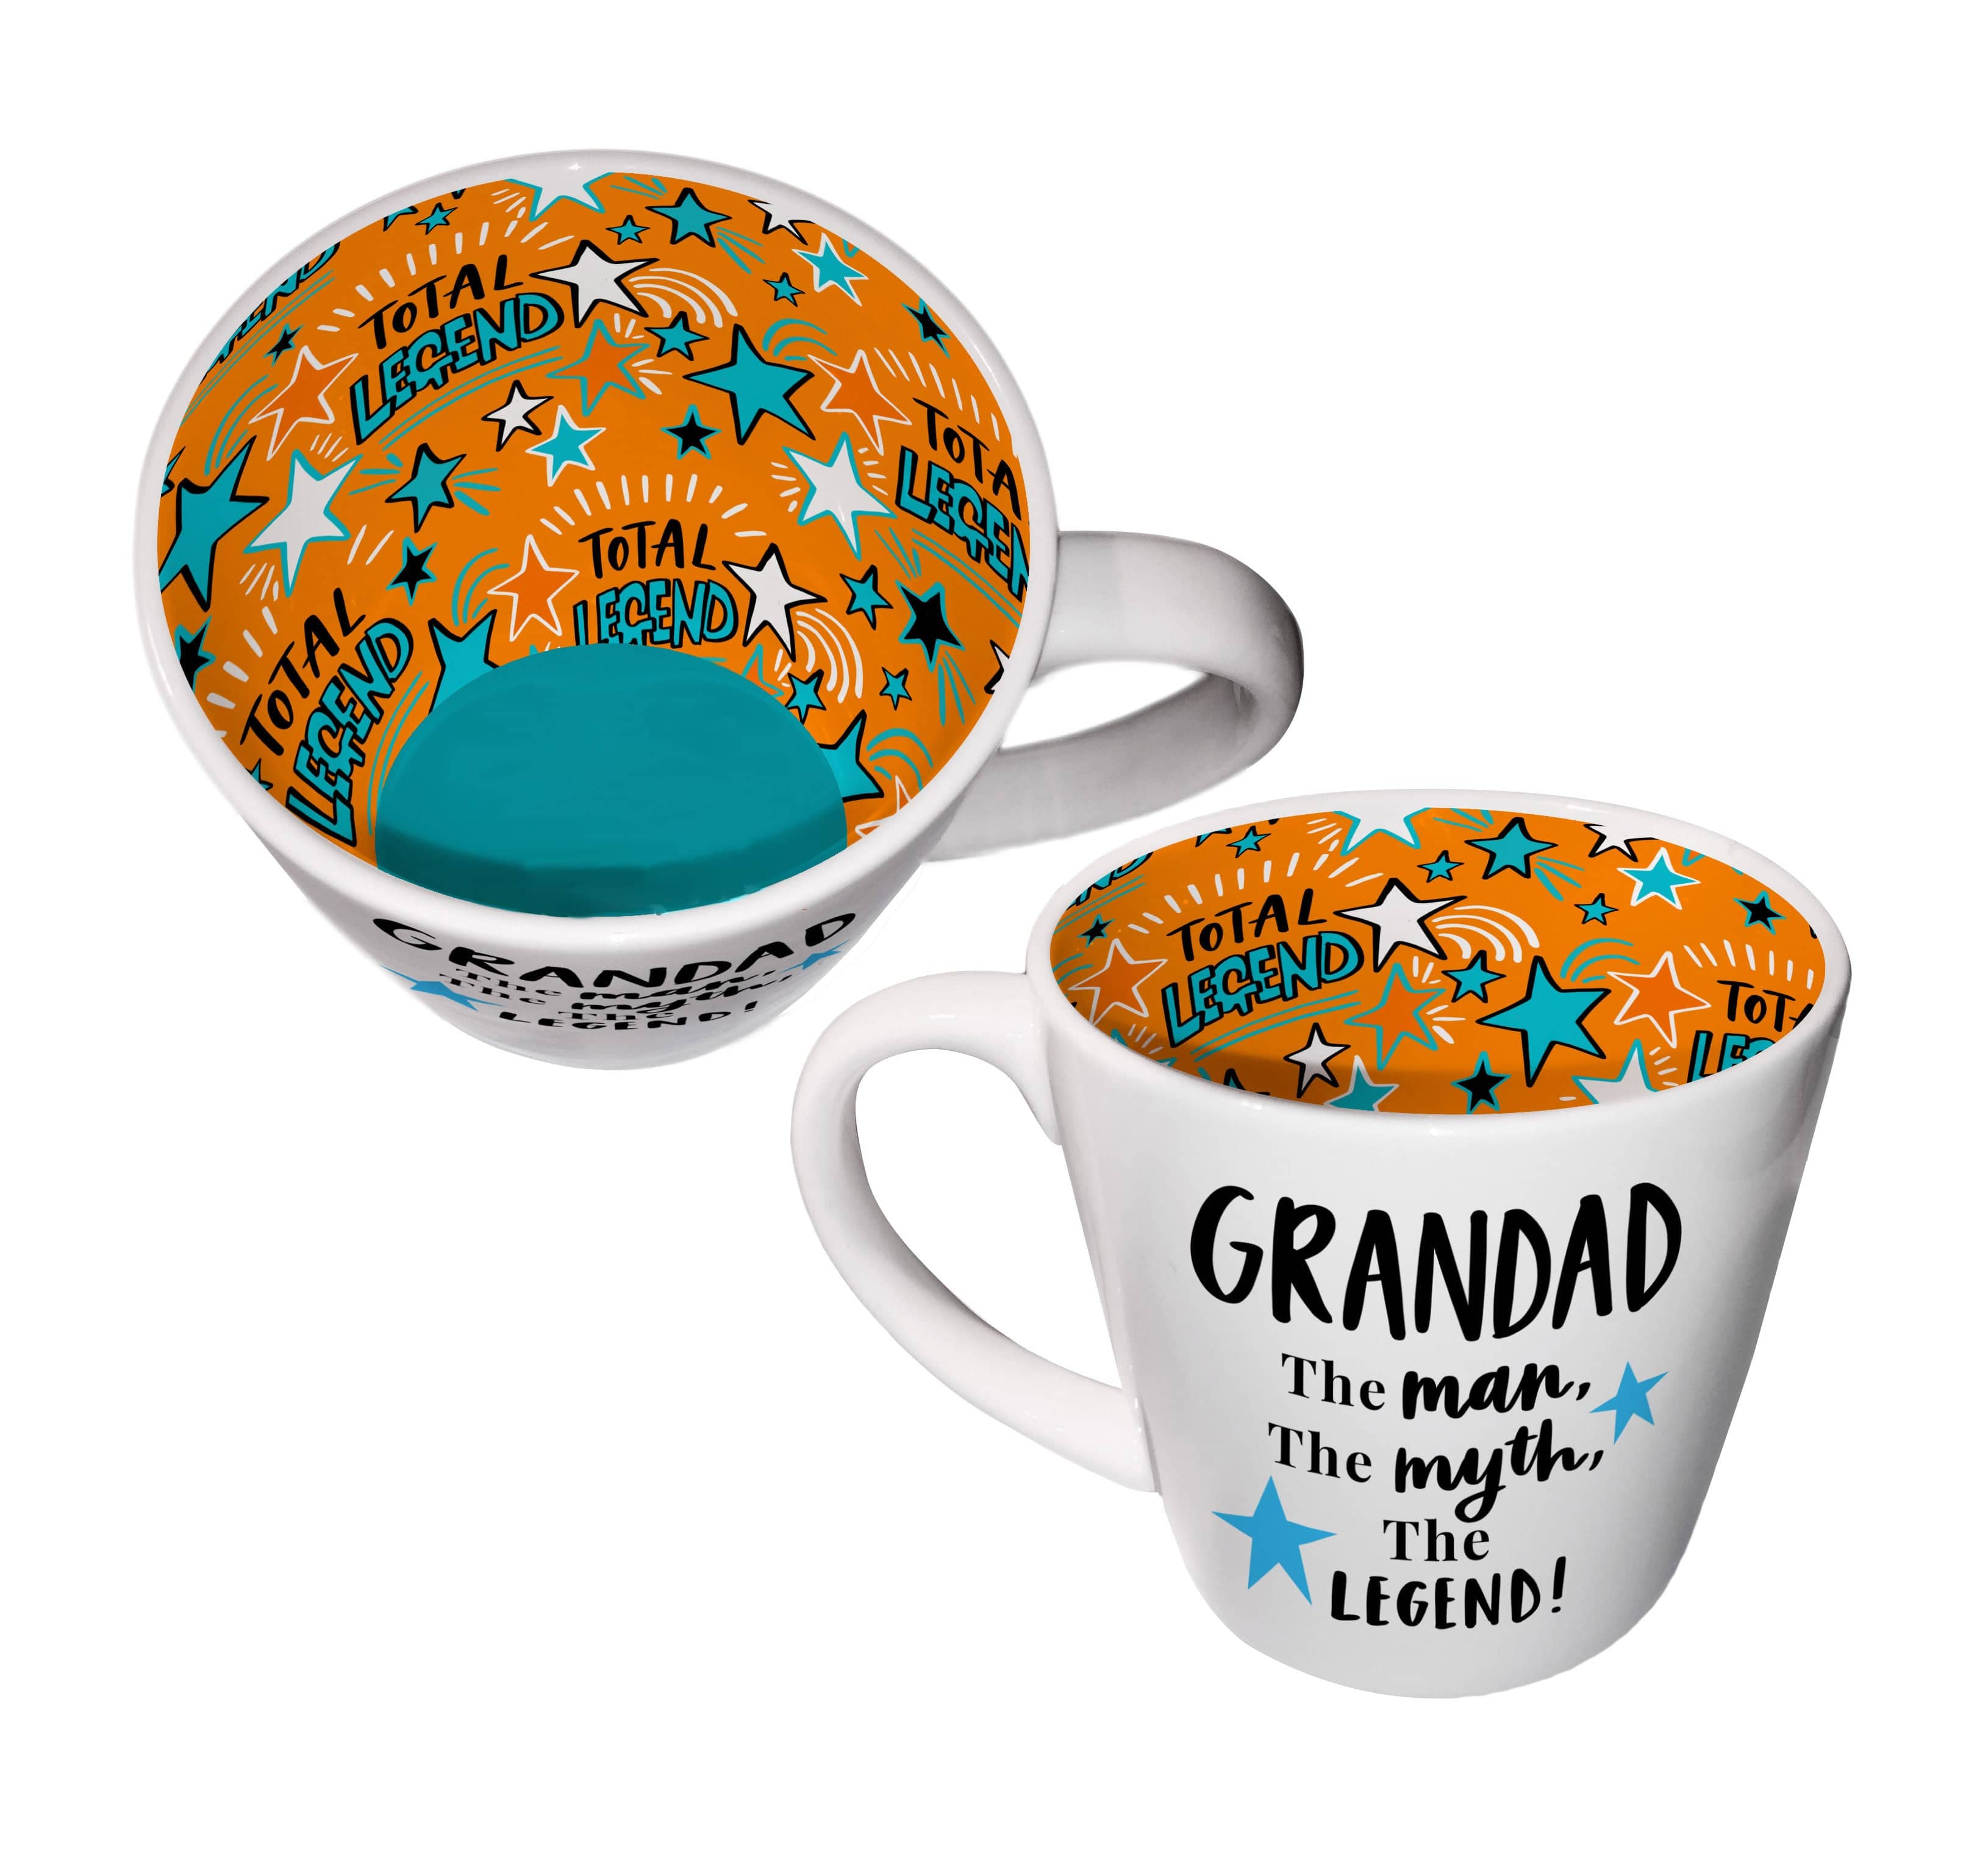 WPL Gifts Mug Inside Out Mug With Gift Box - Grandad, The Man, The Myth, The Legend